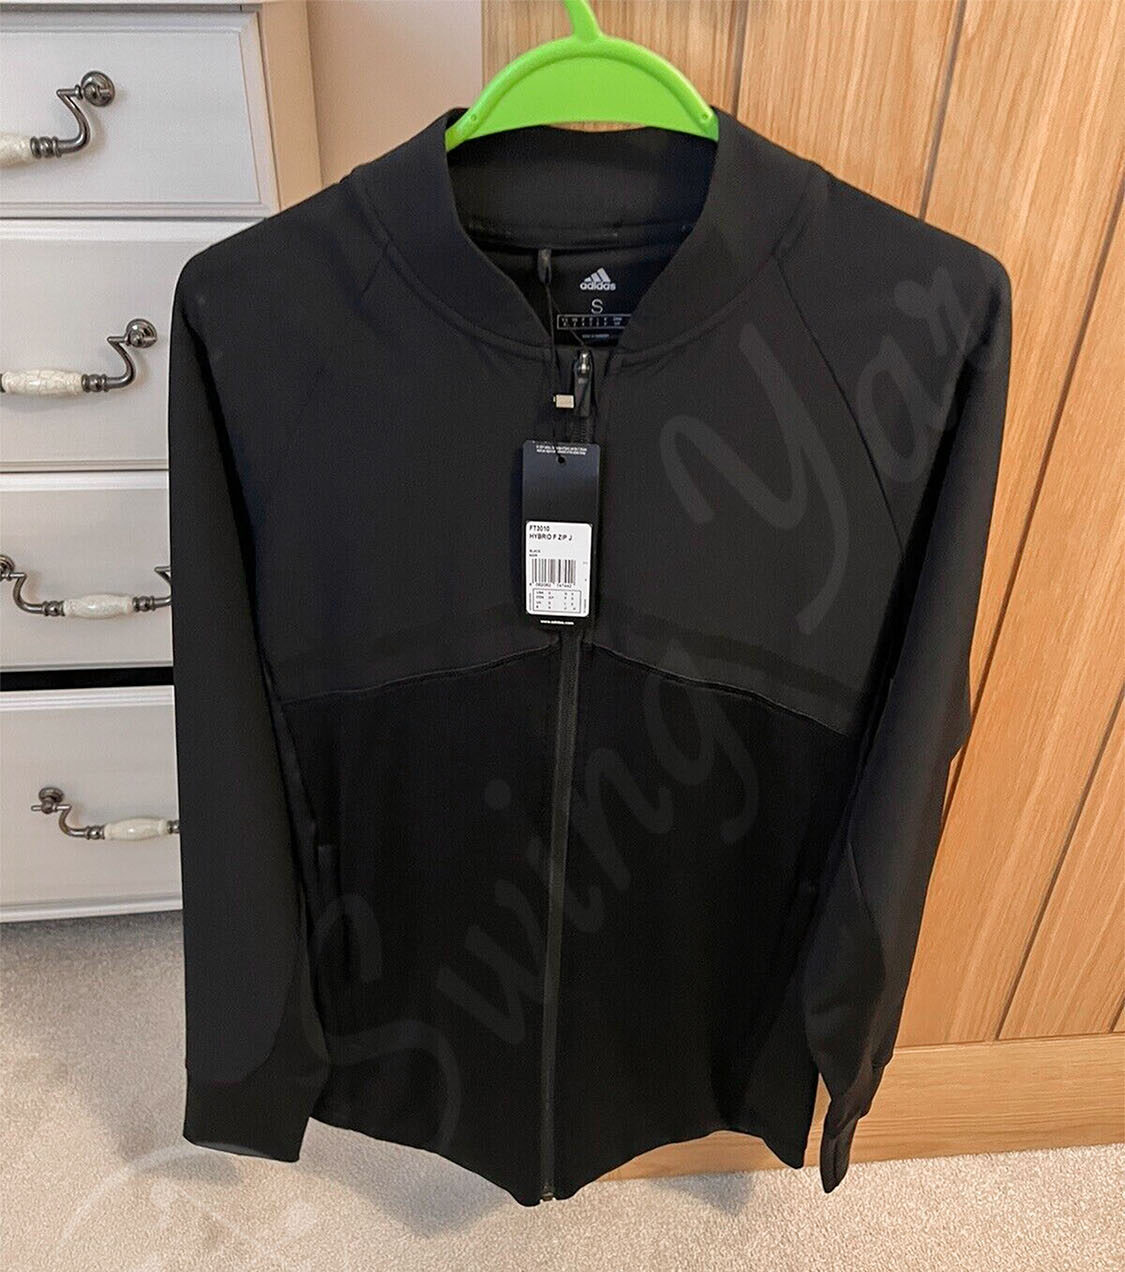 My new Adidas Men’s Hybrid Golf Winter Jacket hanging in my room